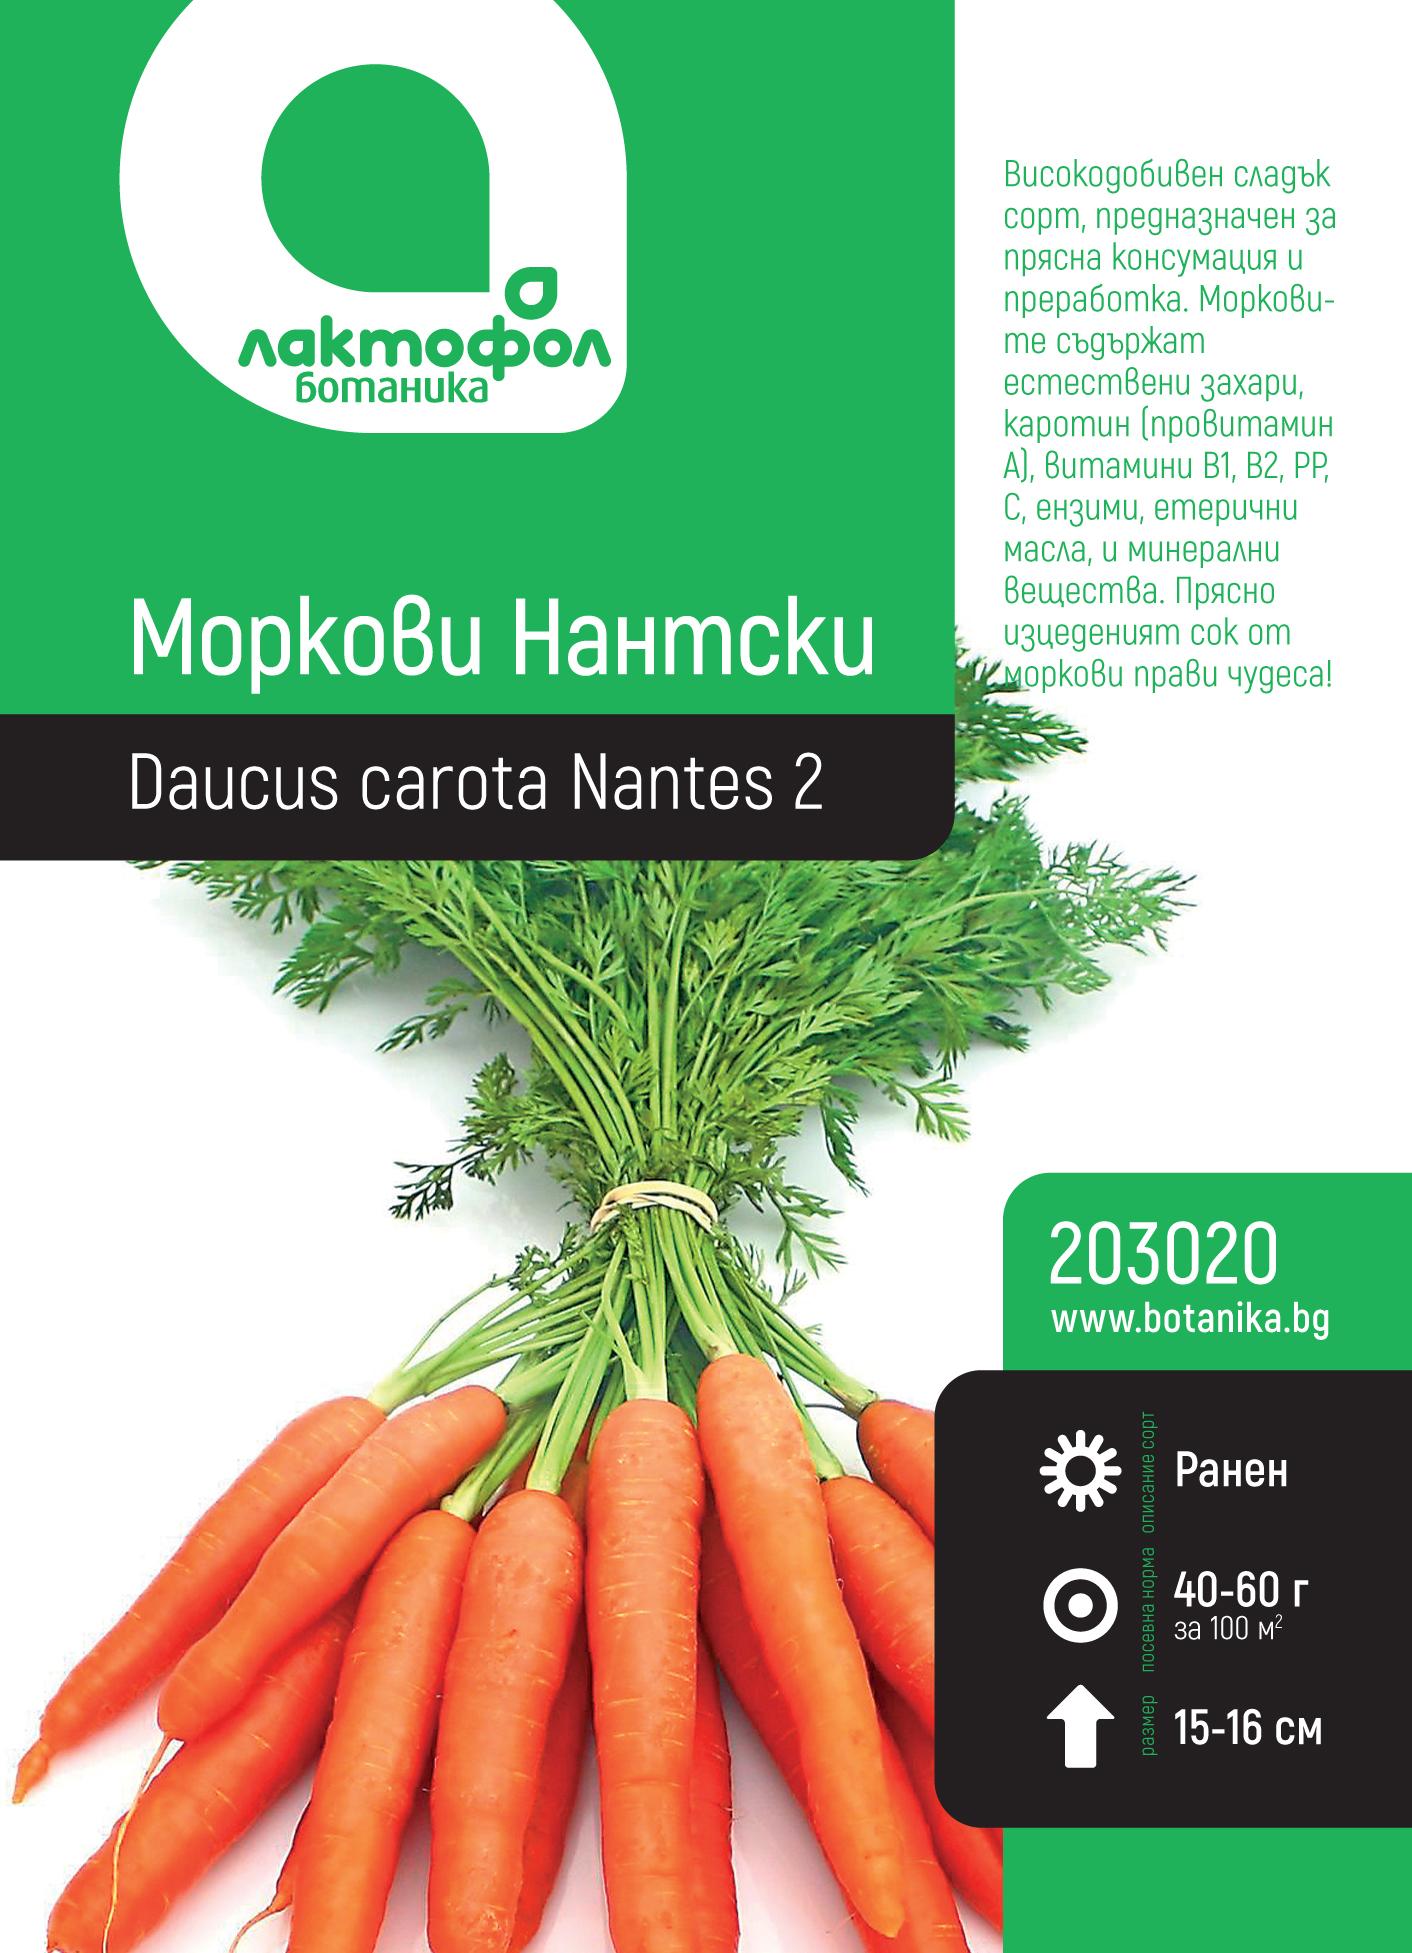 Моркови Нантски